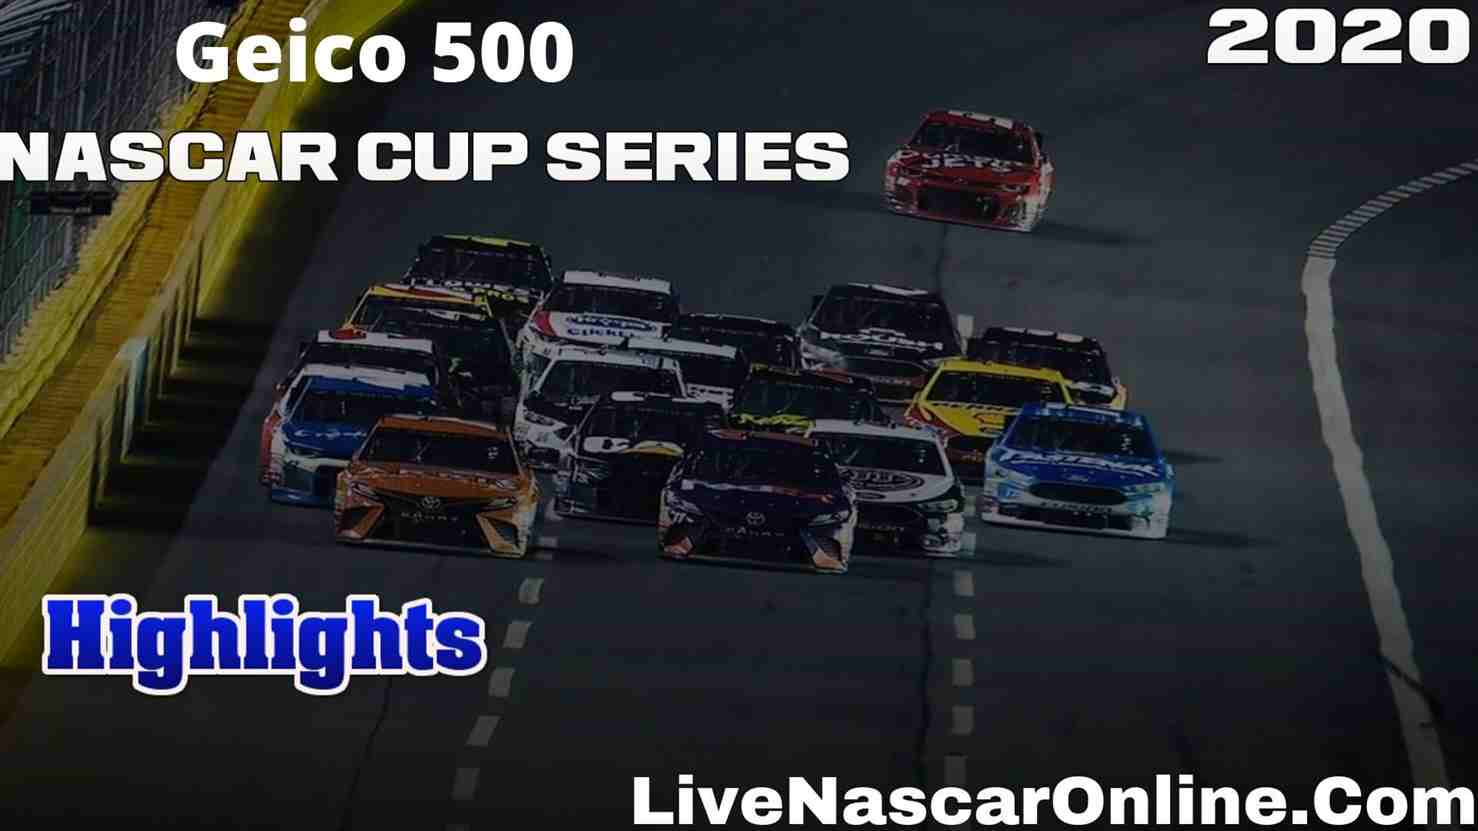 Geico 500 Nascar Cup Series Highlights 2020